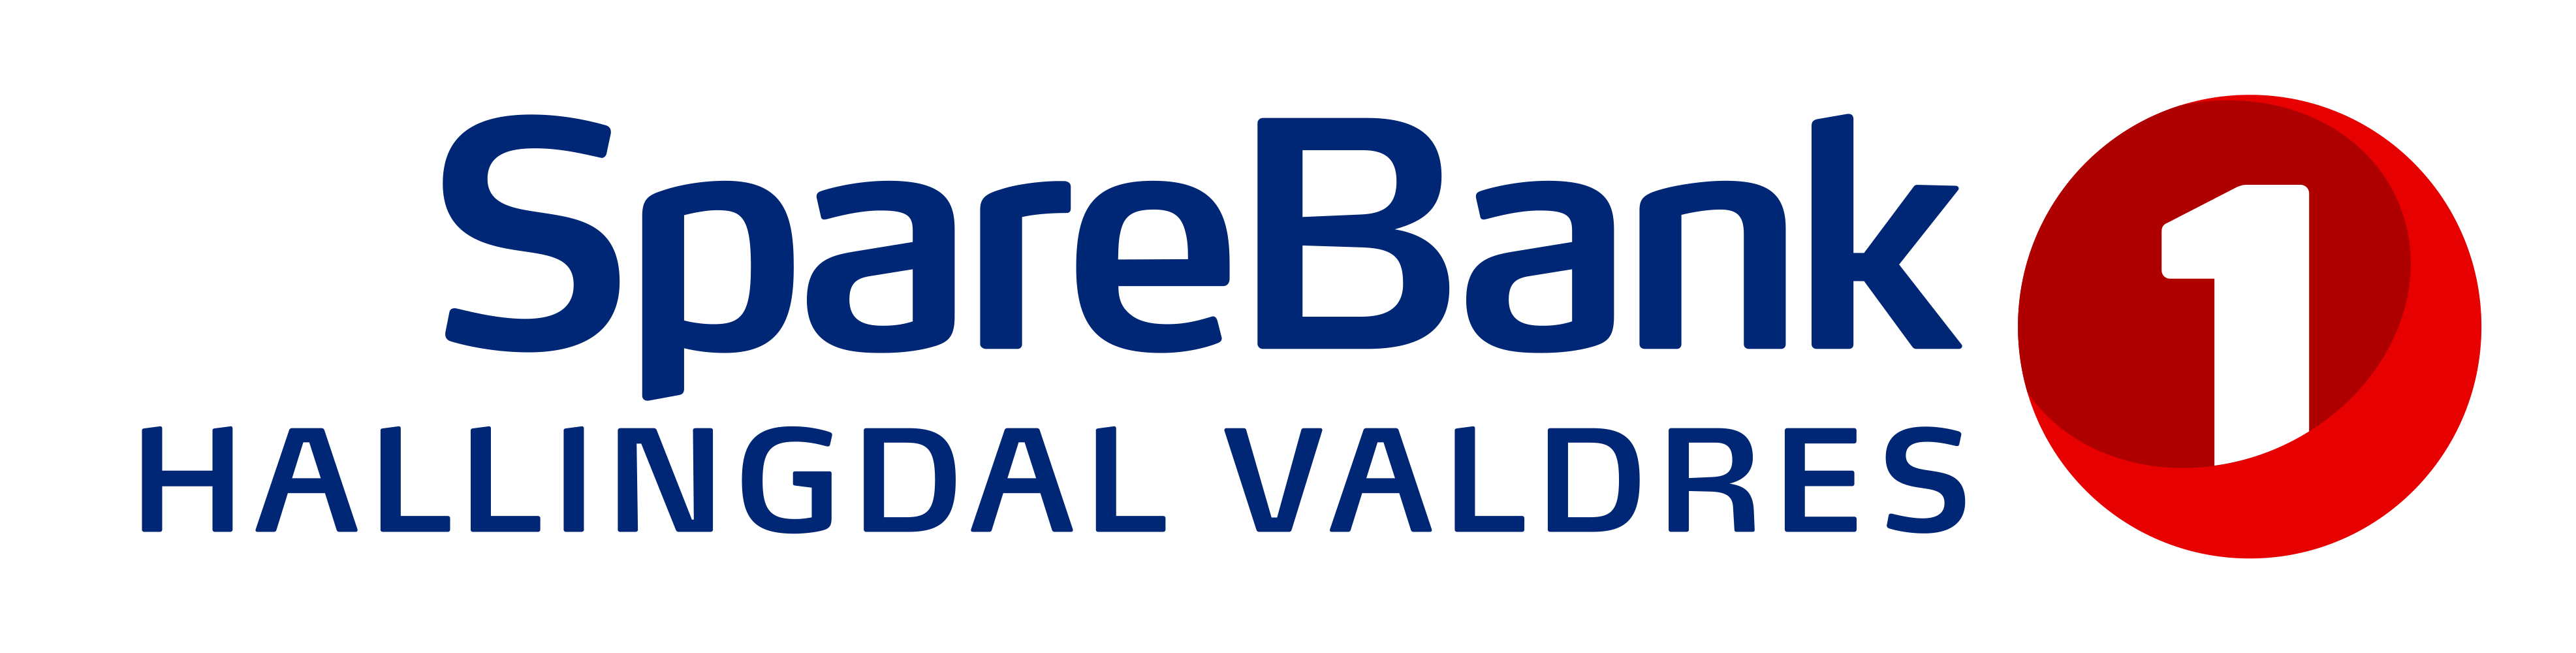 SpareBank 1 Hallingdal Valdres logo